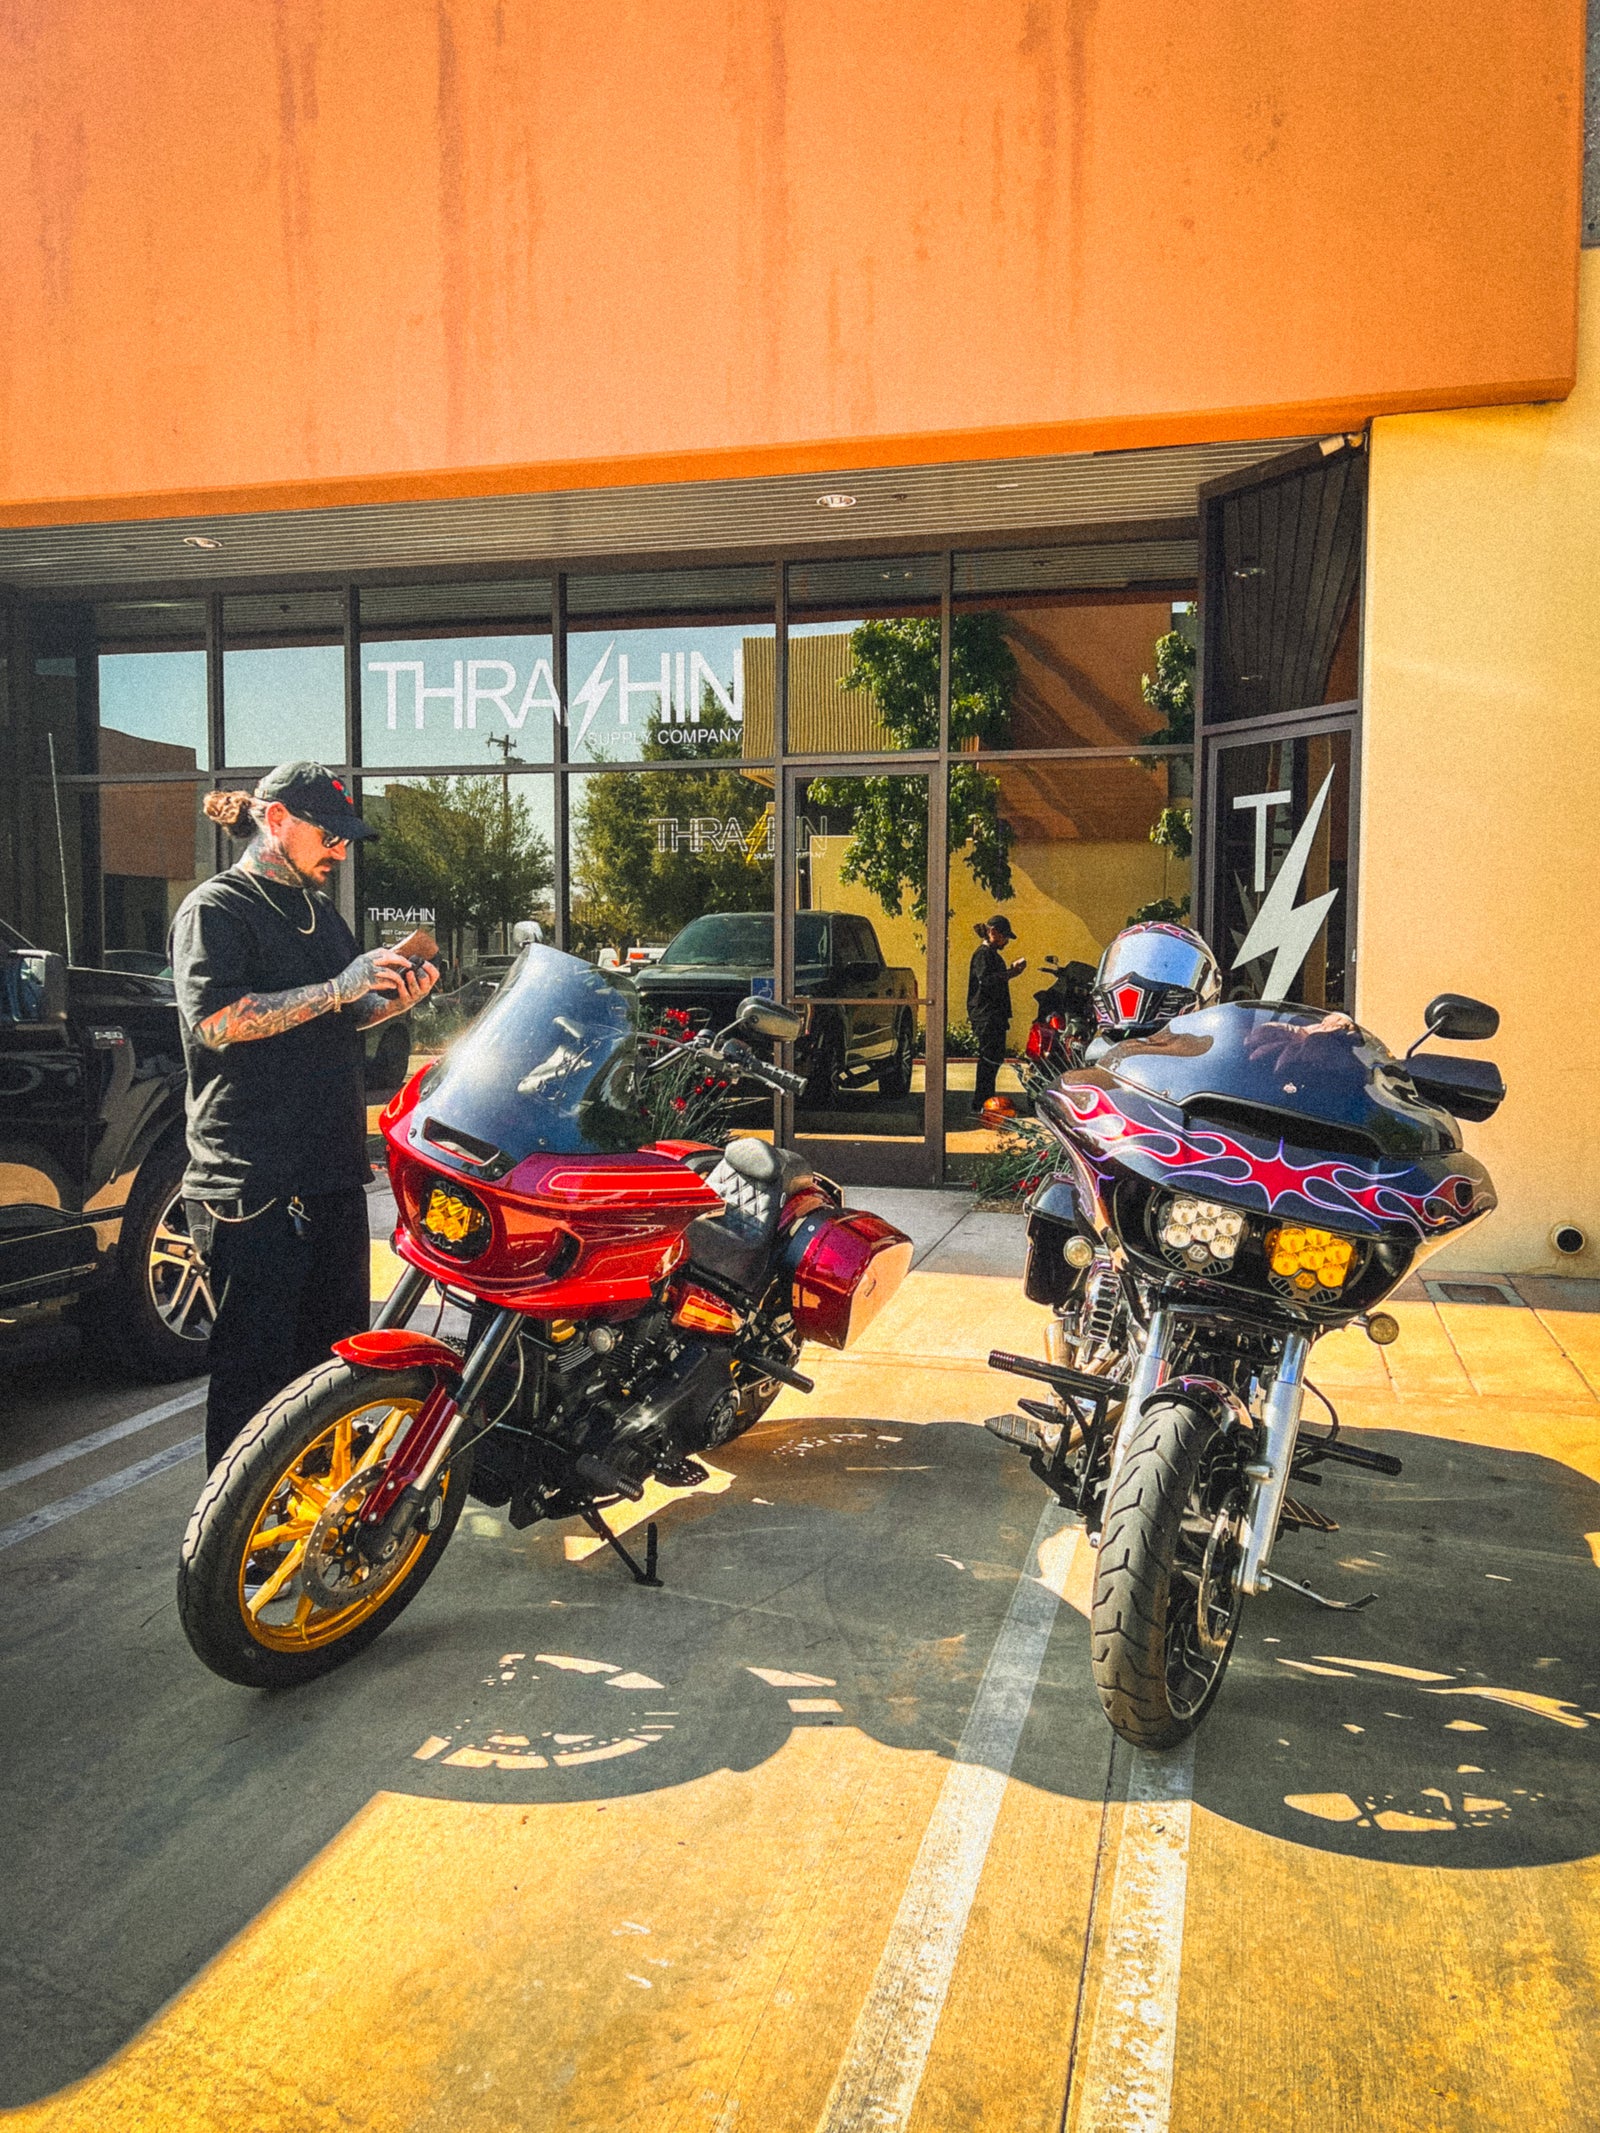 Riding Harley-Davidsons in California! Visiting VGHC & Thrashin Supply!